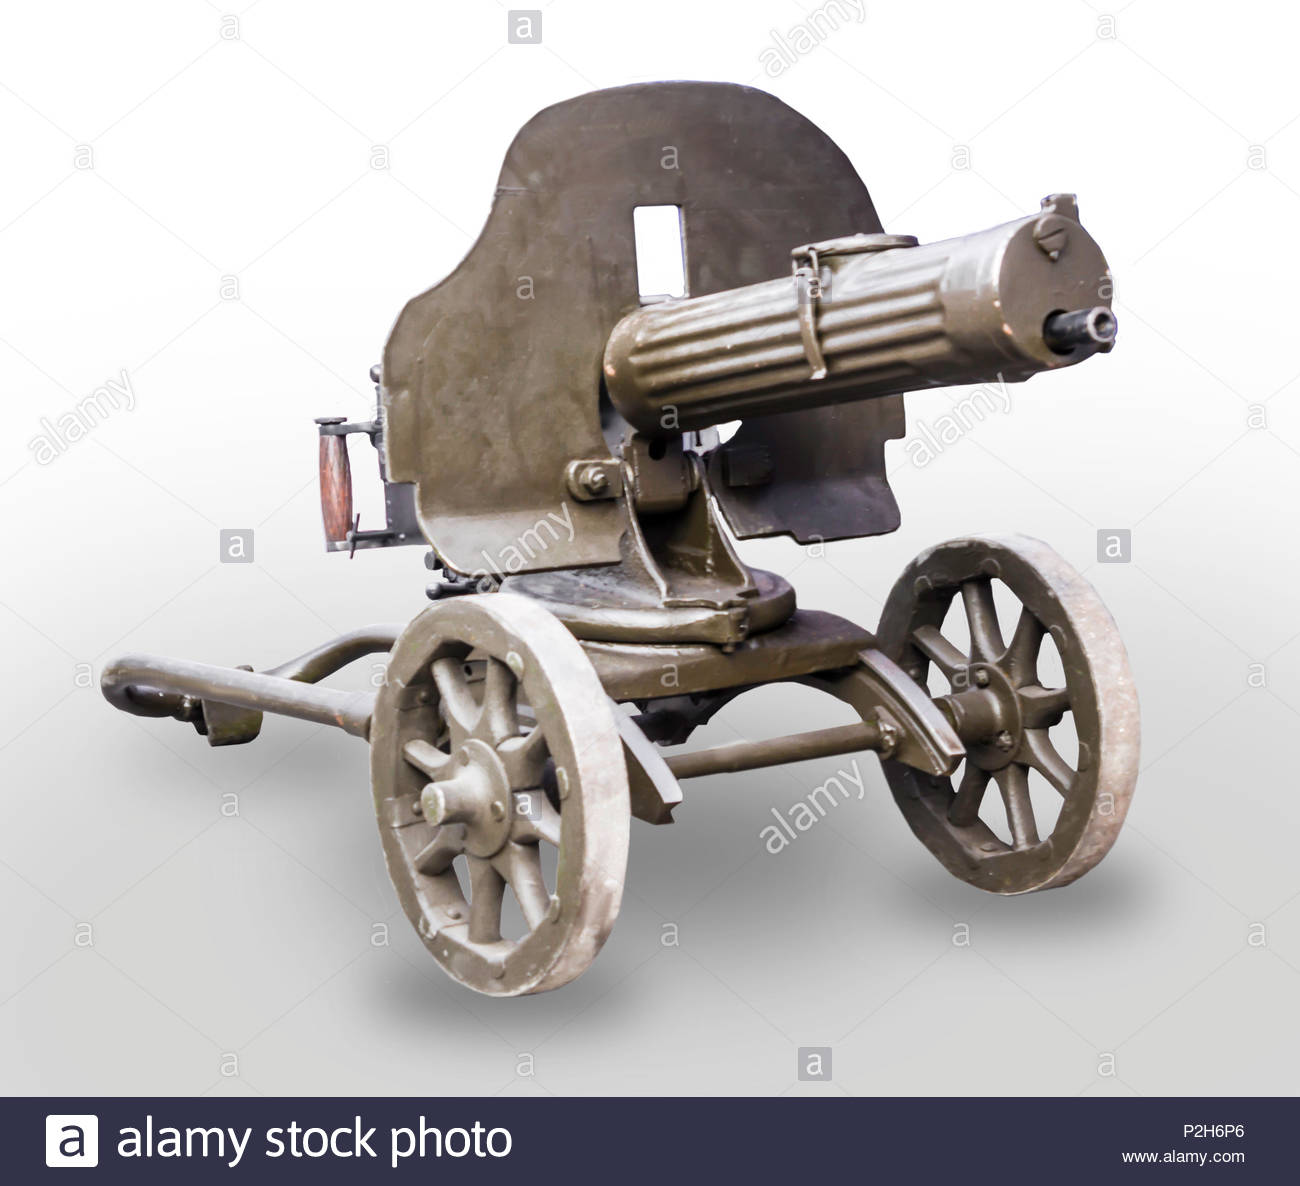 The Old Machine Gun Maxim Model Isolated Image On White